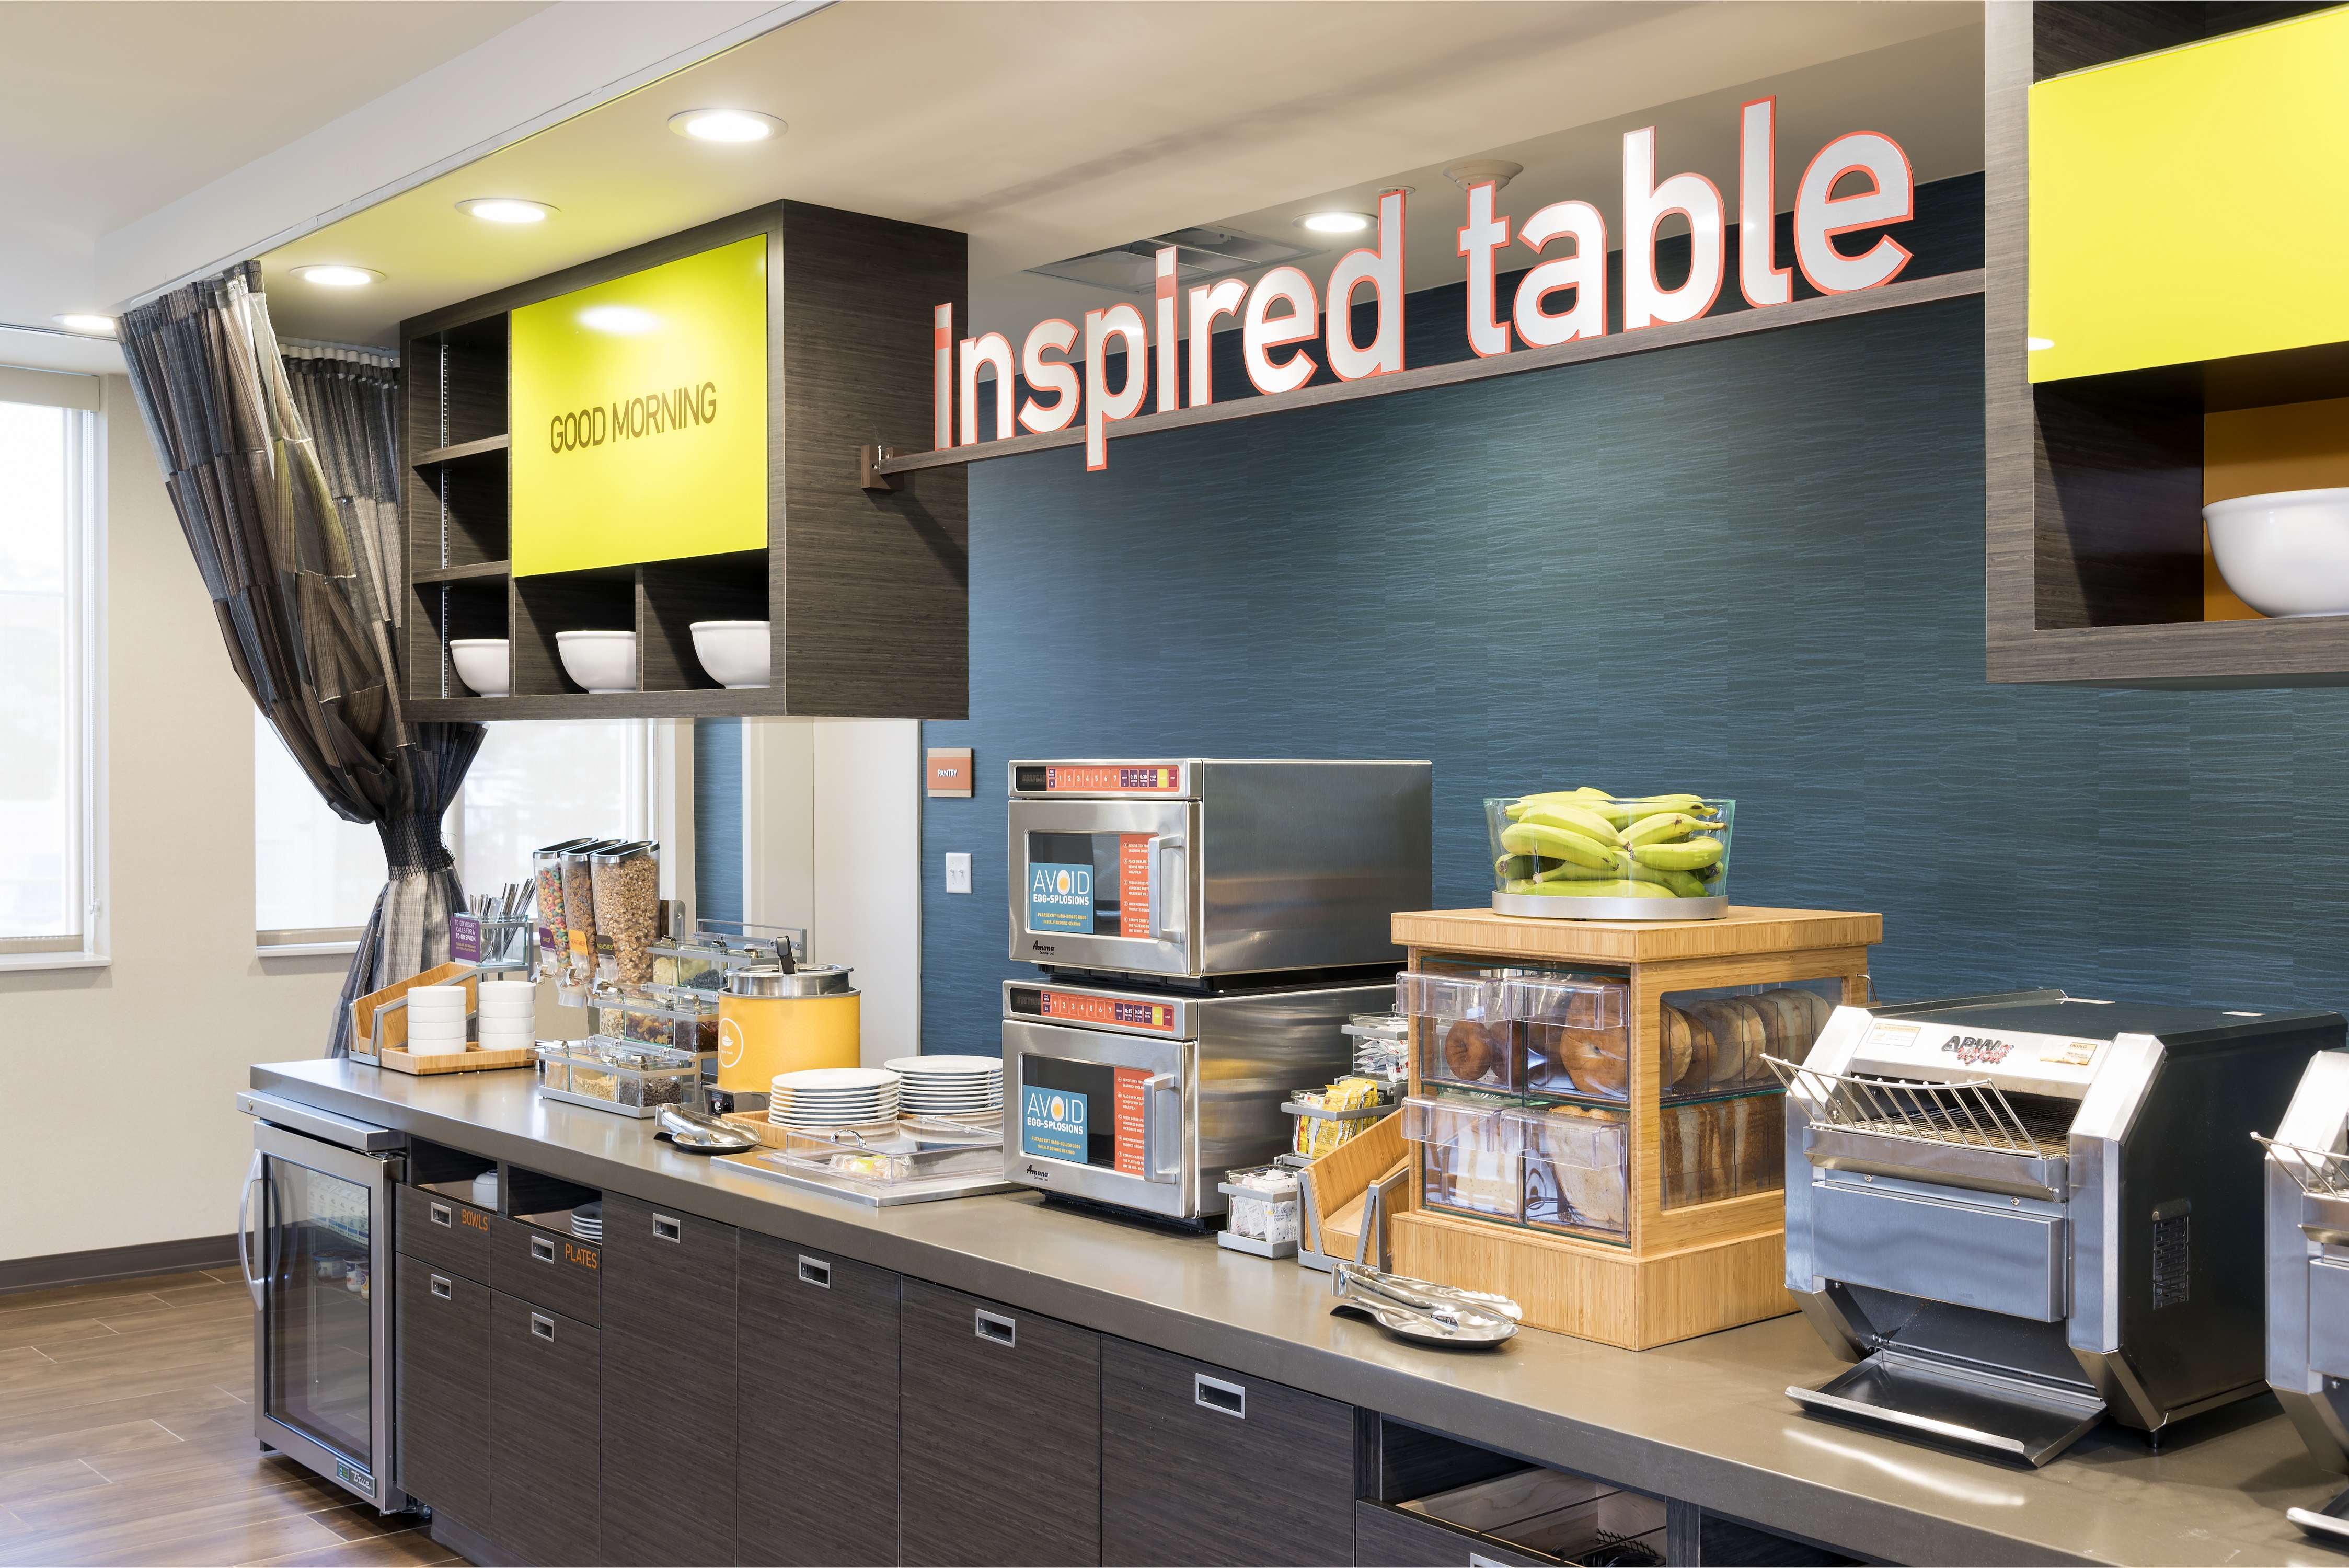 Inspired Table Breakfast Buffet Serving Area